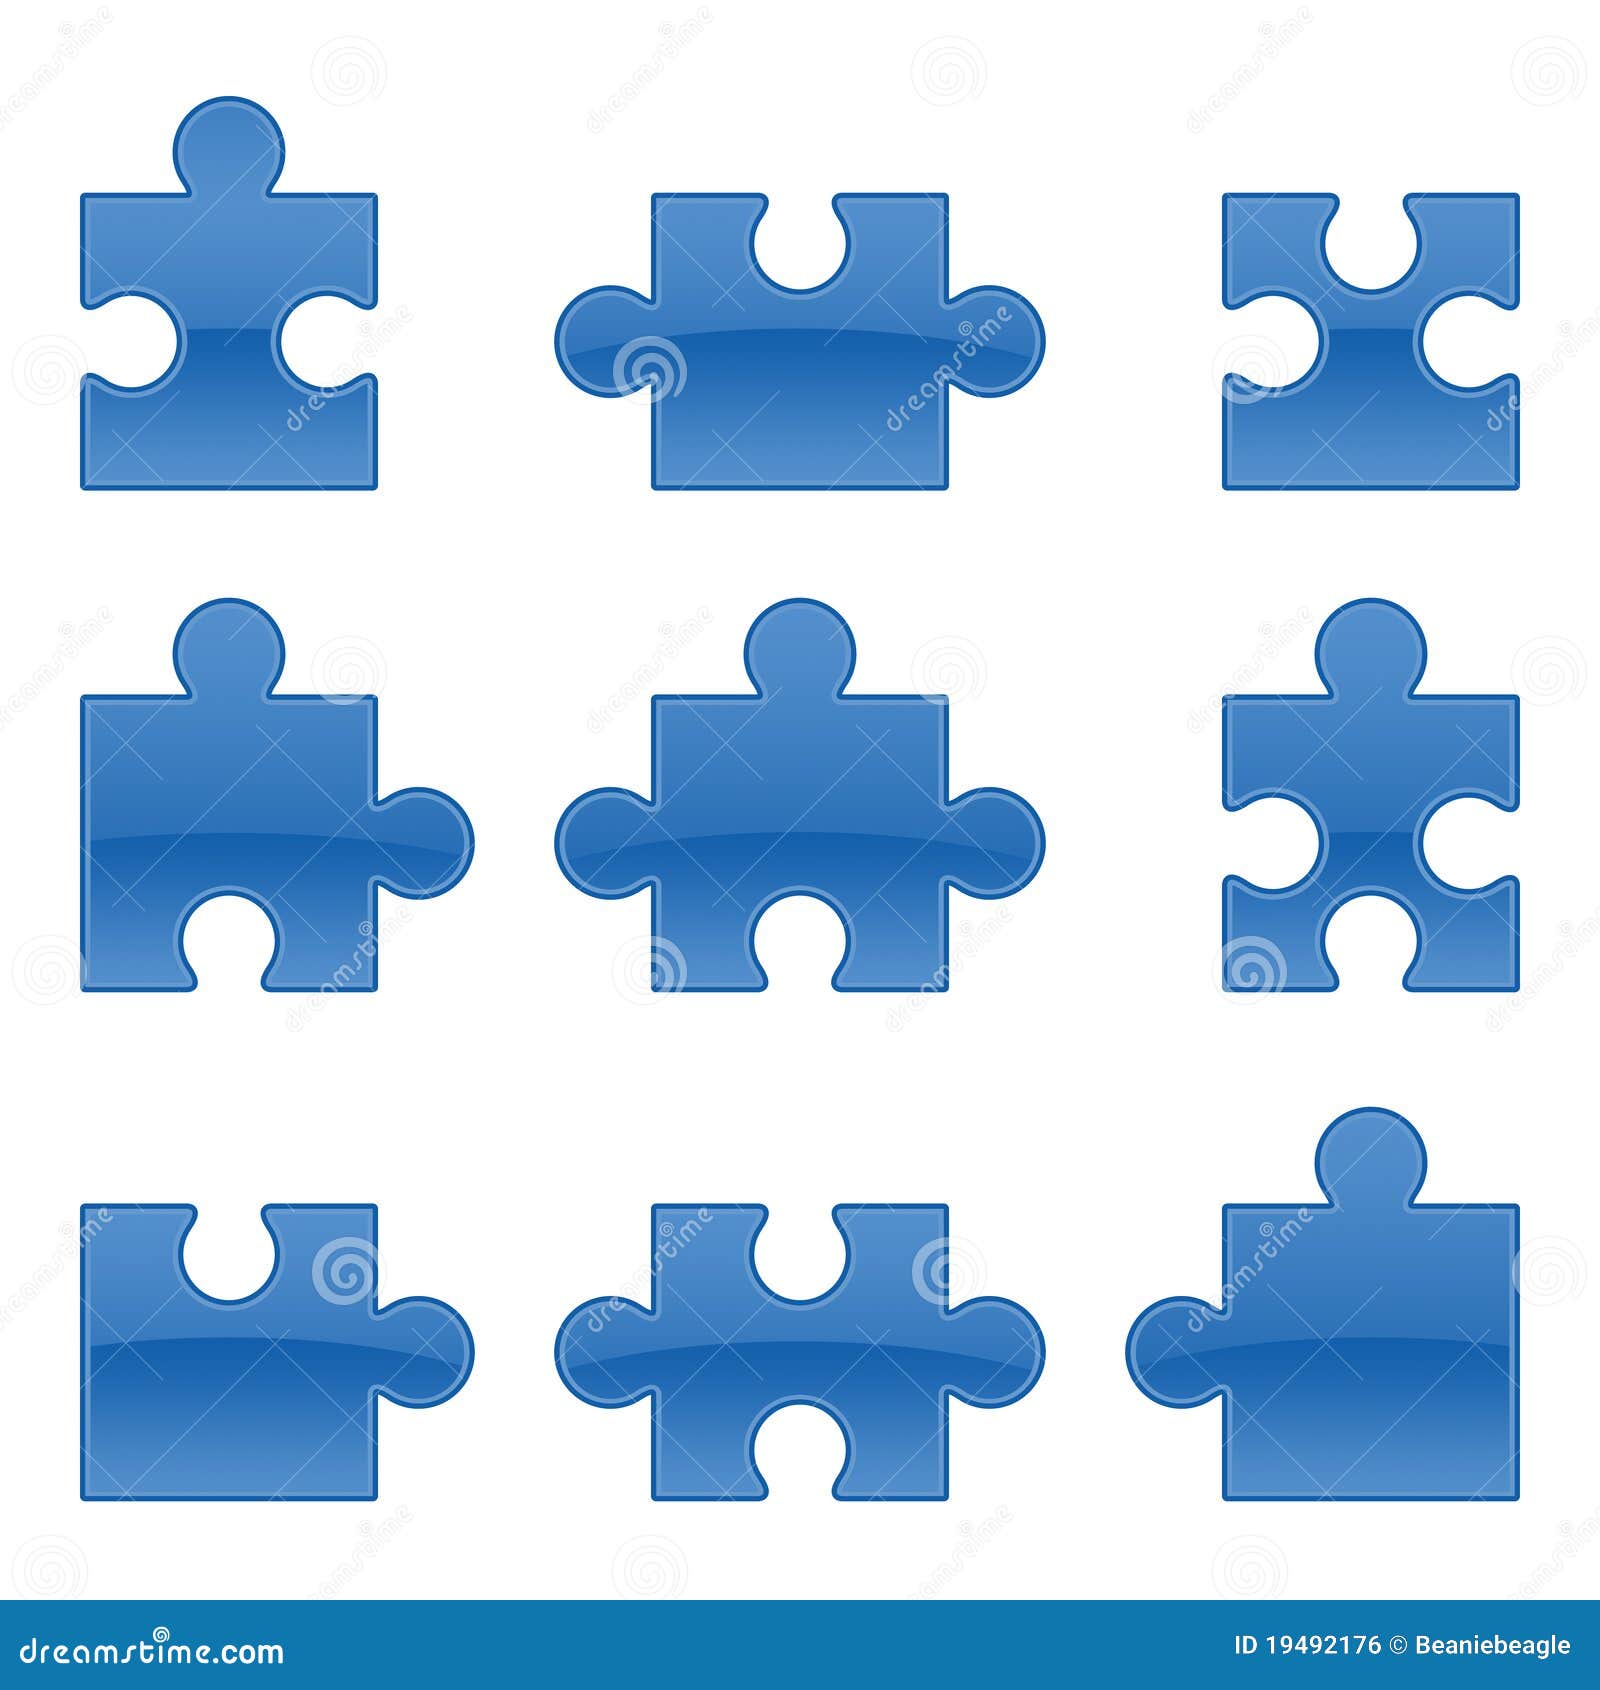 17 Kids Blank Puzzles ideas  puzzle piece template, puzzle pieces, kids  blanks